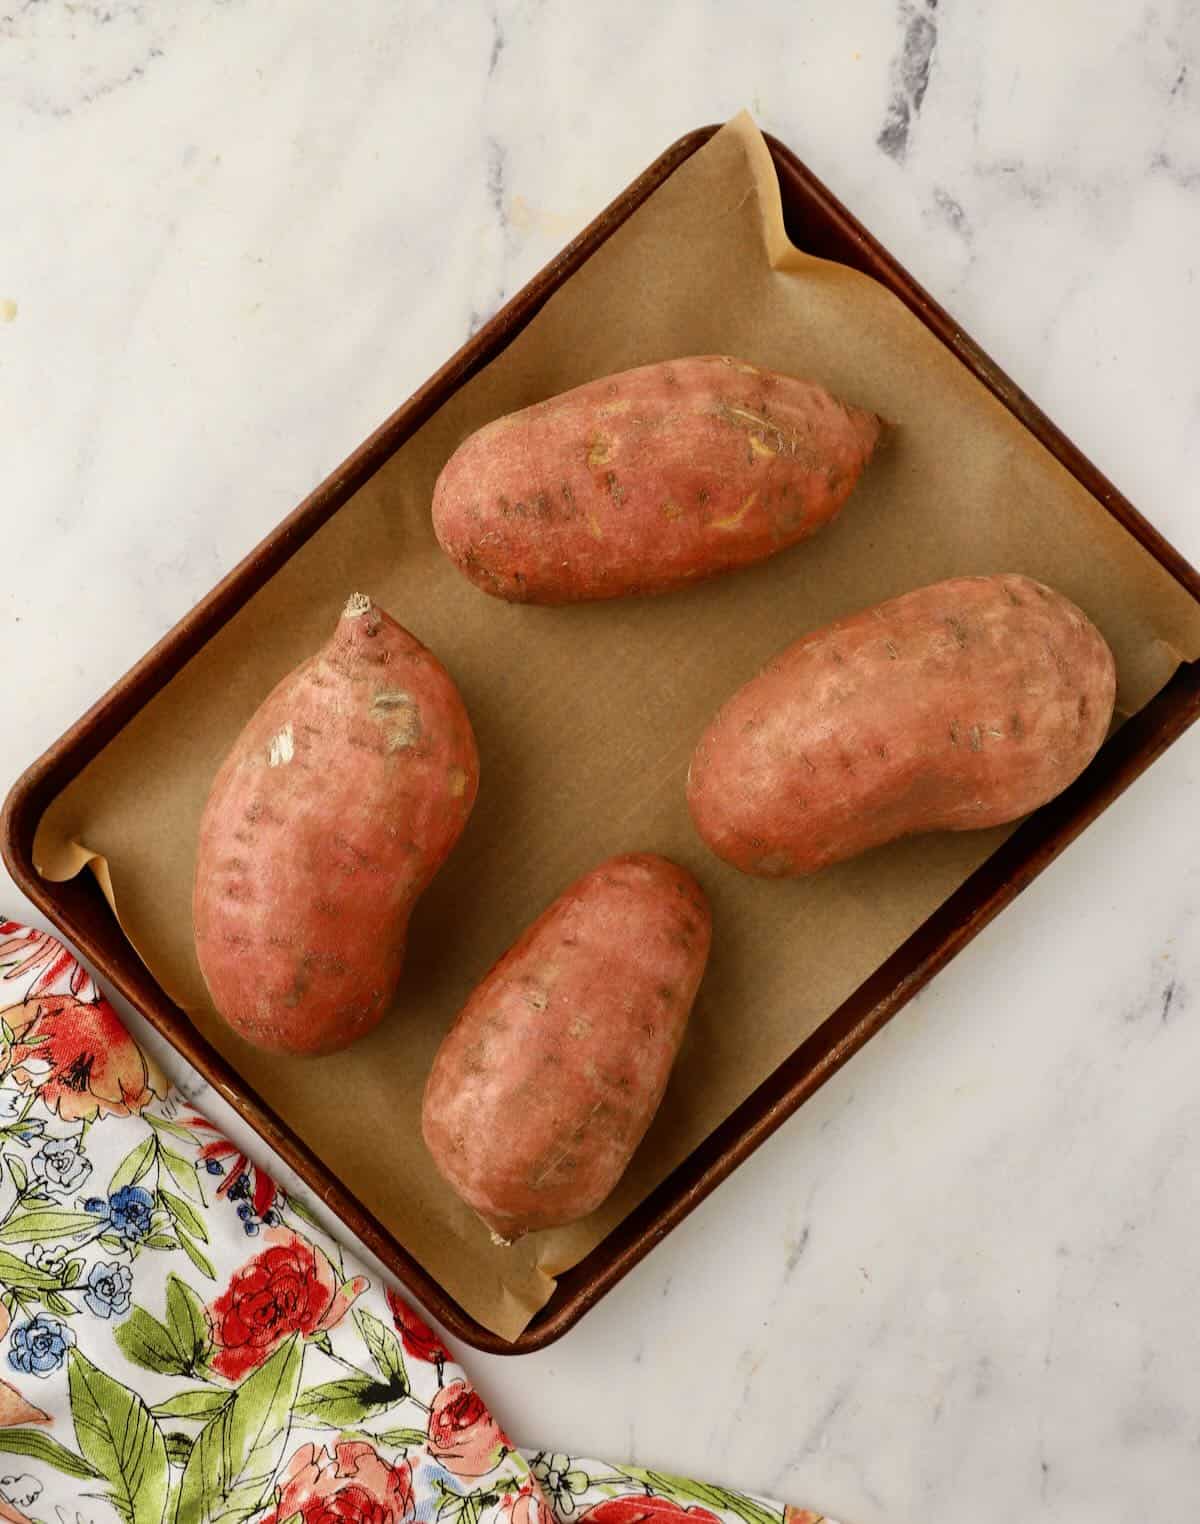 Four sweet potatoes on a baking sheet. 